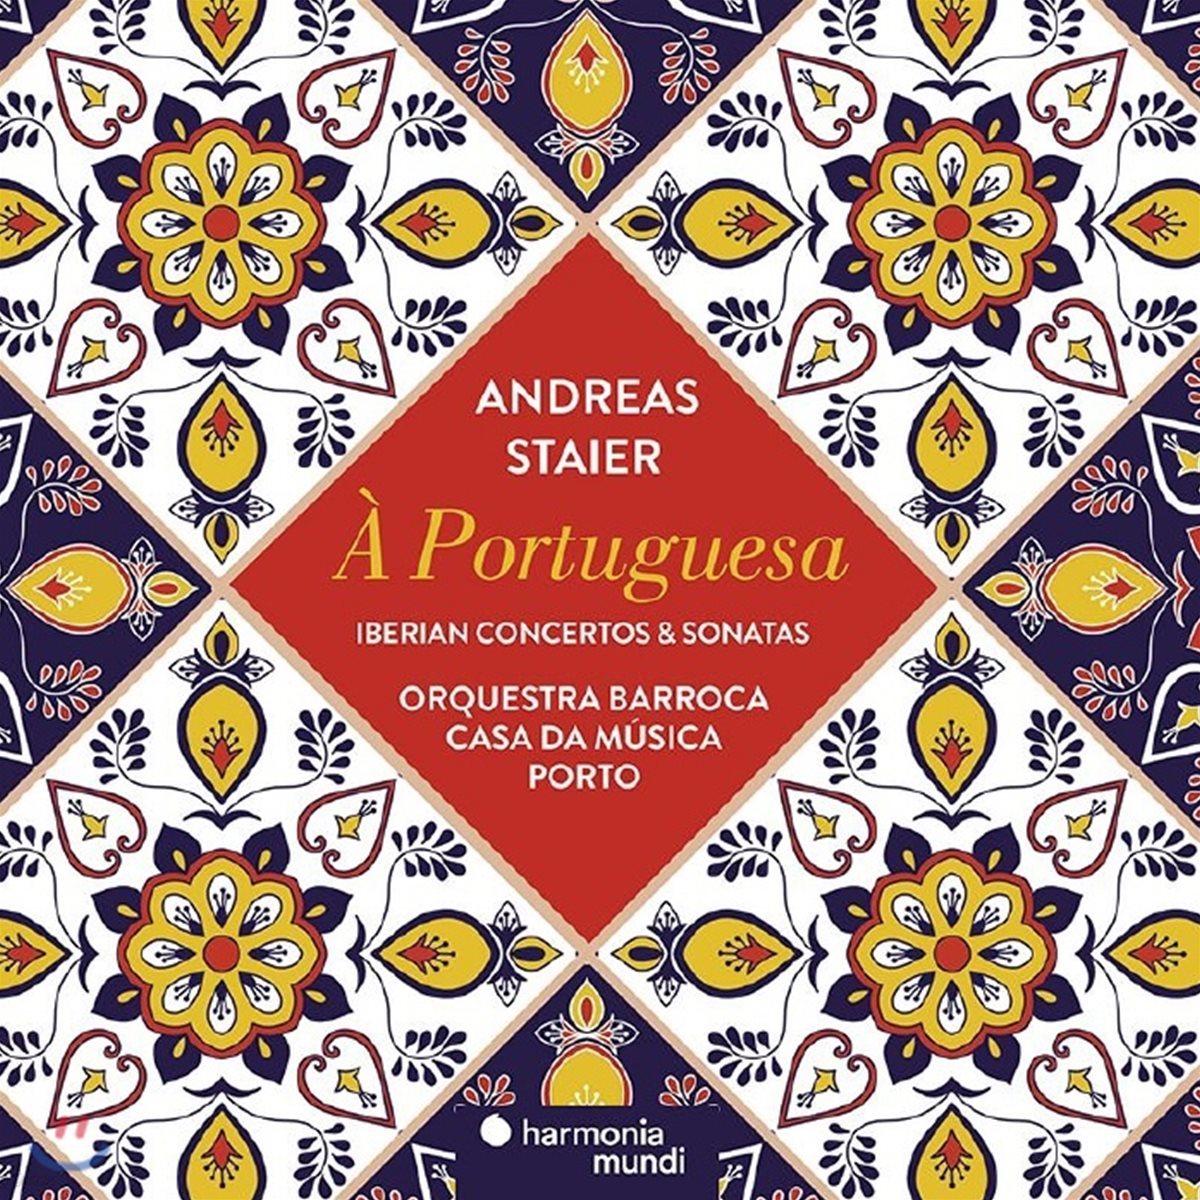 Andreas Staier &#39;포르투갈풍의&#39; - 이베리아의 협주곡과 소나타집 (A Portuguesa - Iberian Concertos &amp; Sonatas) 안드레아스 슈타이어